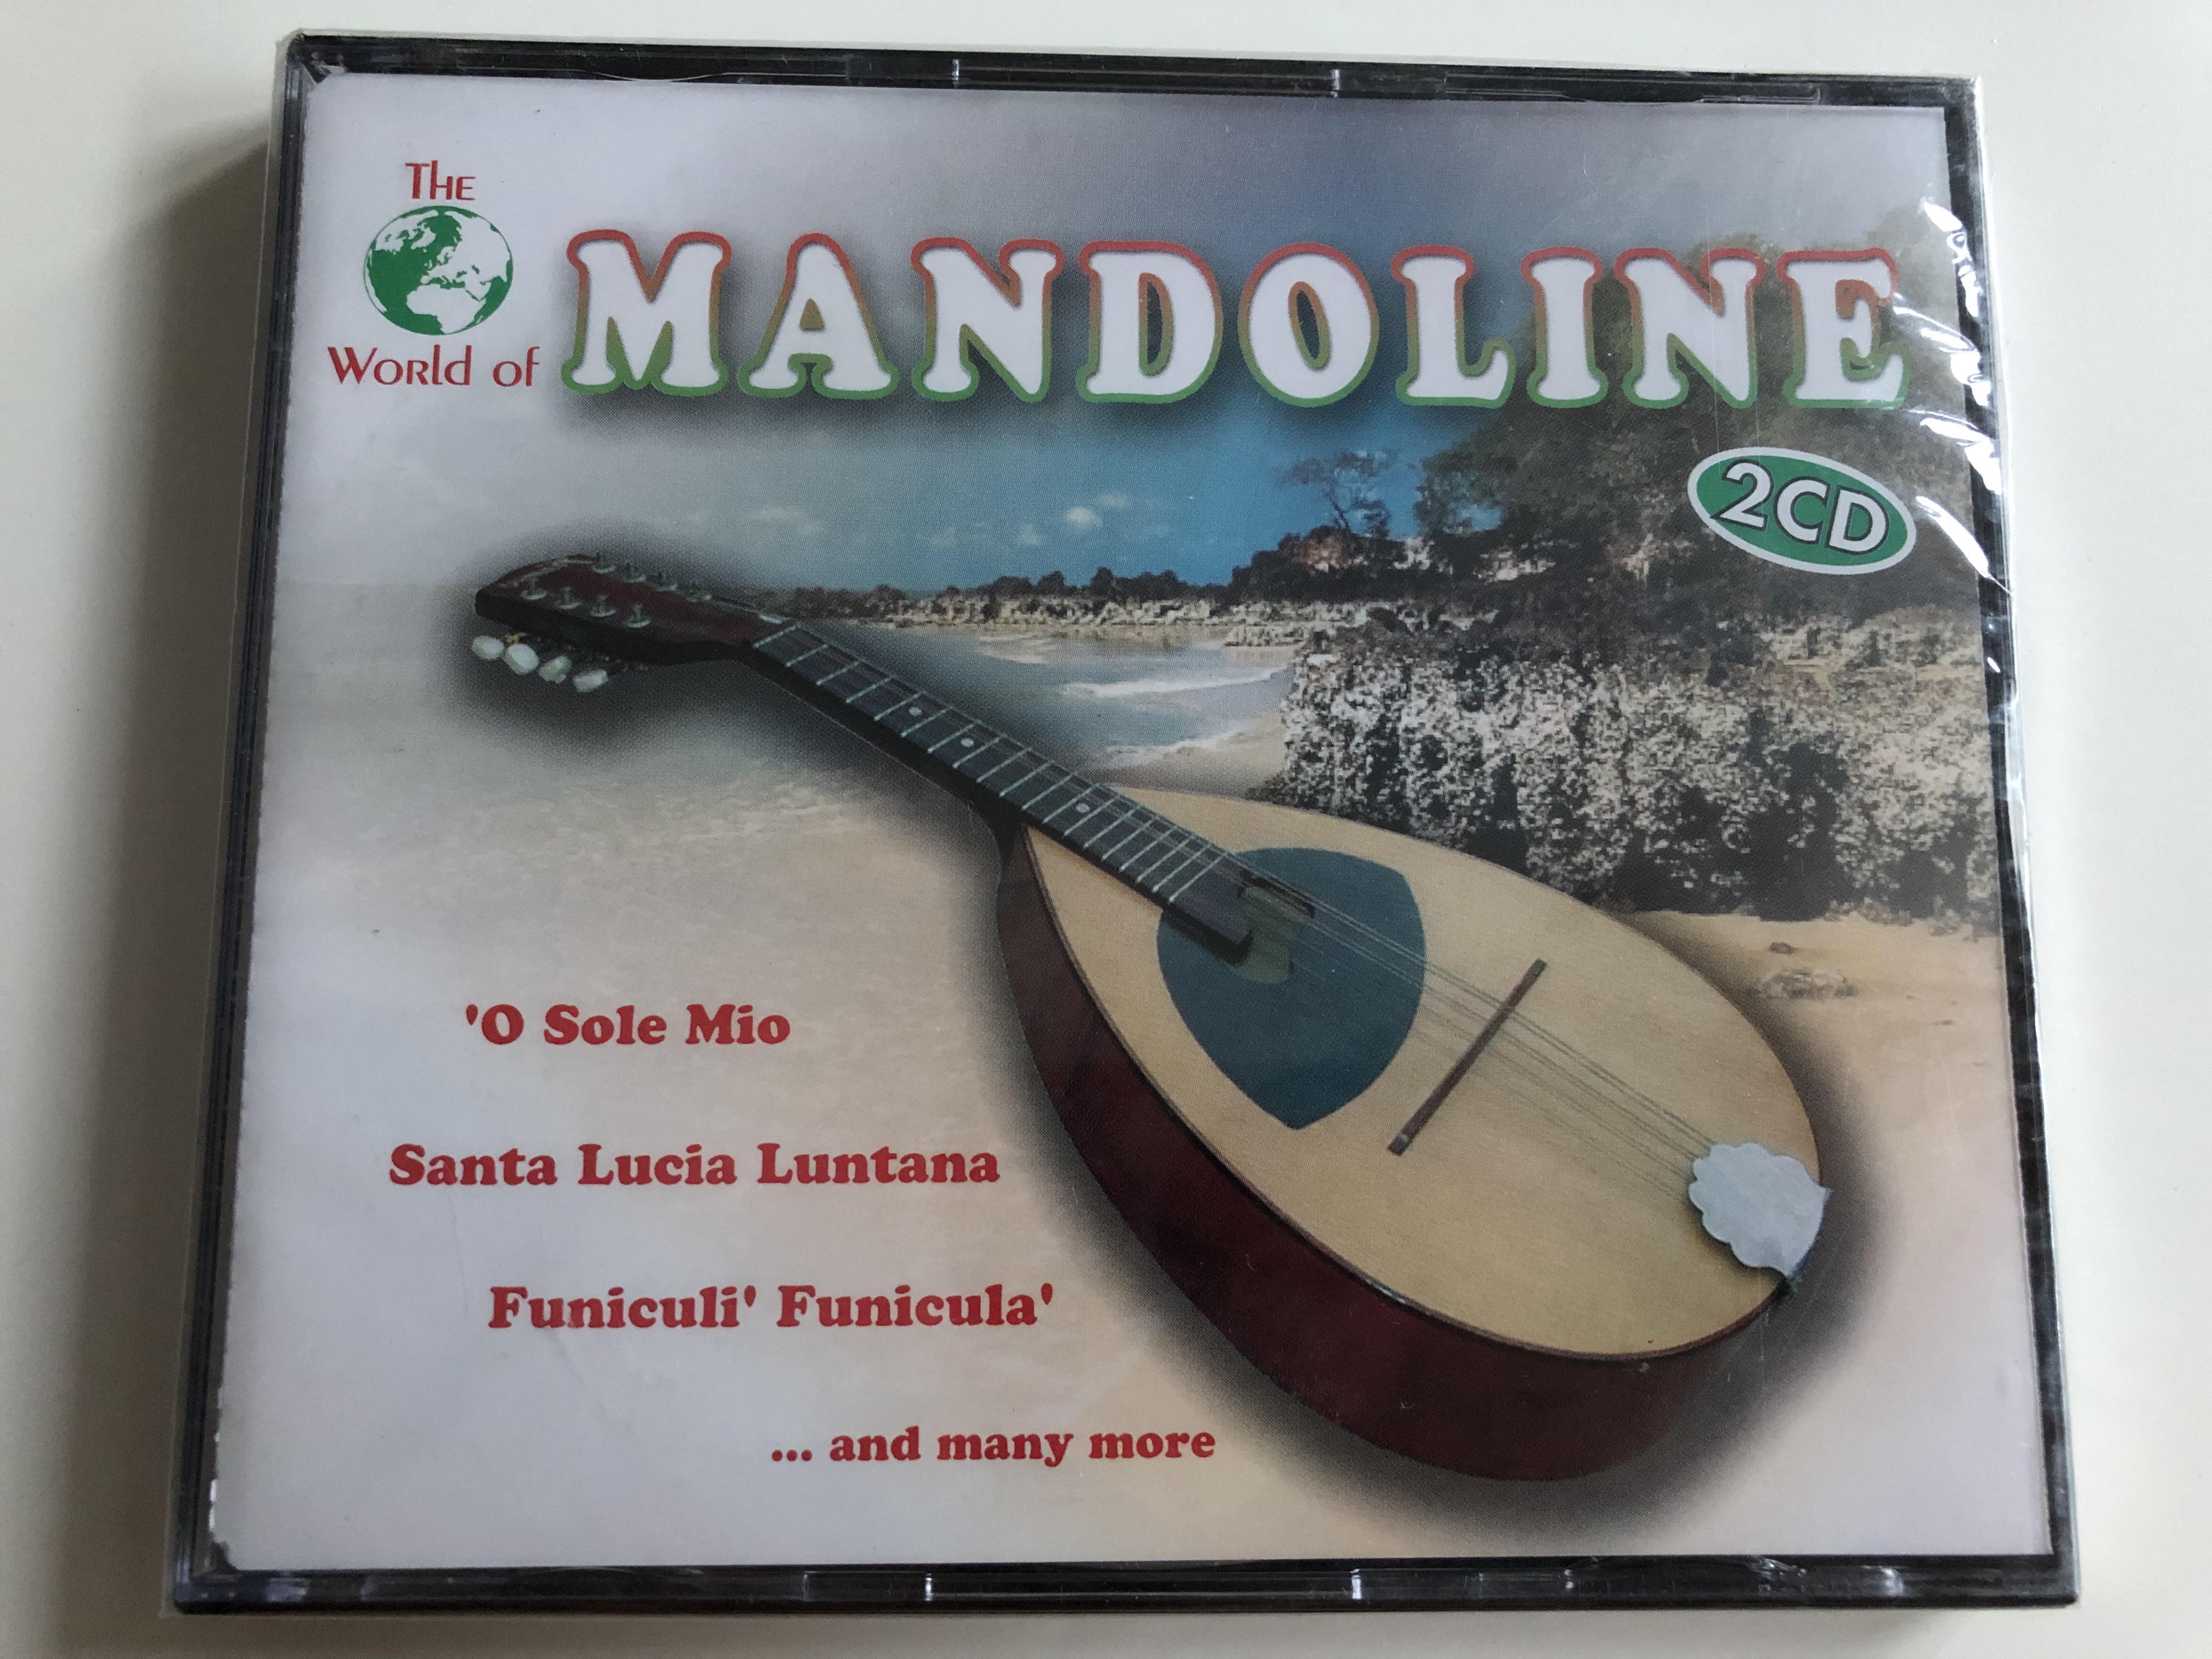 the-world-of-mandoline-2cd-o-sole-mio-santa-lucia-luntana-funiculi-funicula-and-many-more-zyx-music-11248-2-audio-cd-2002-1-.jpg